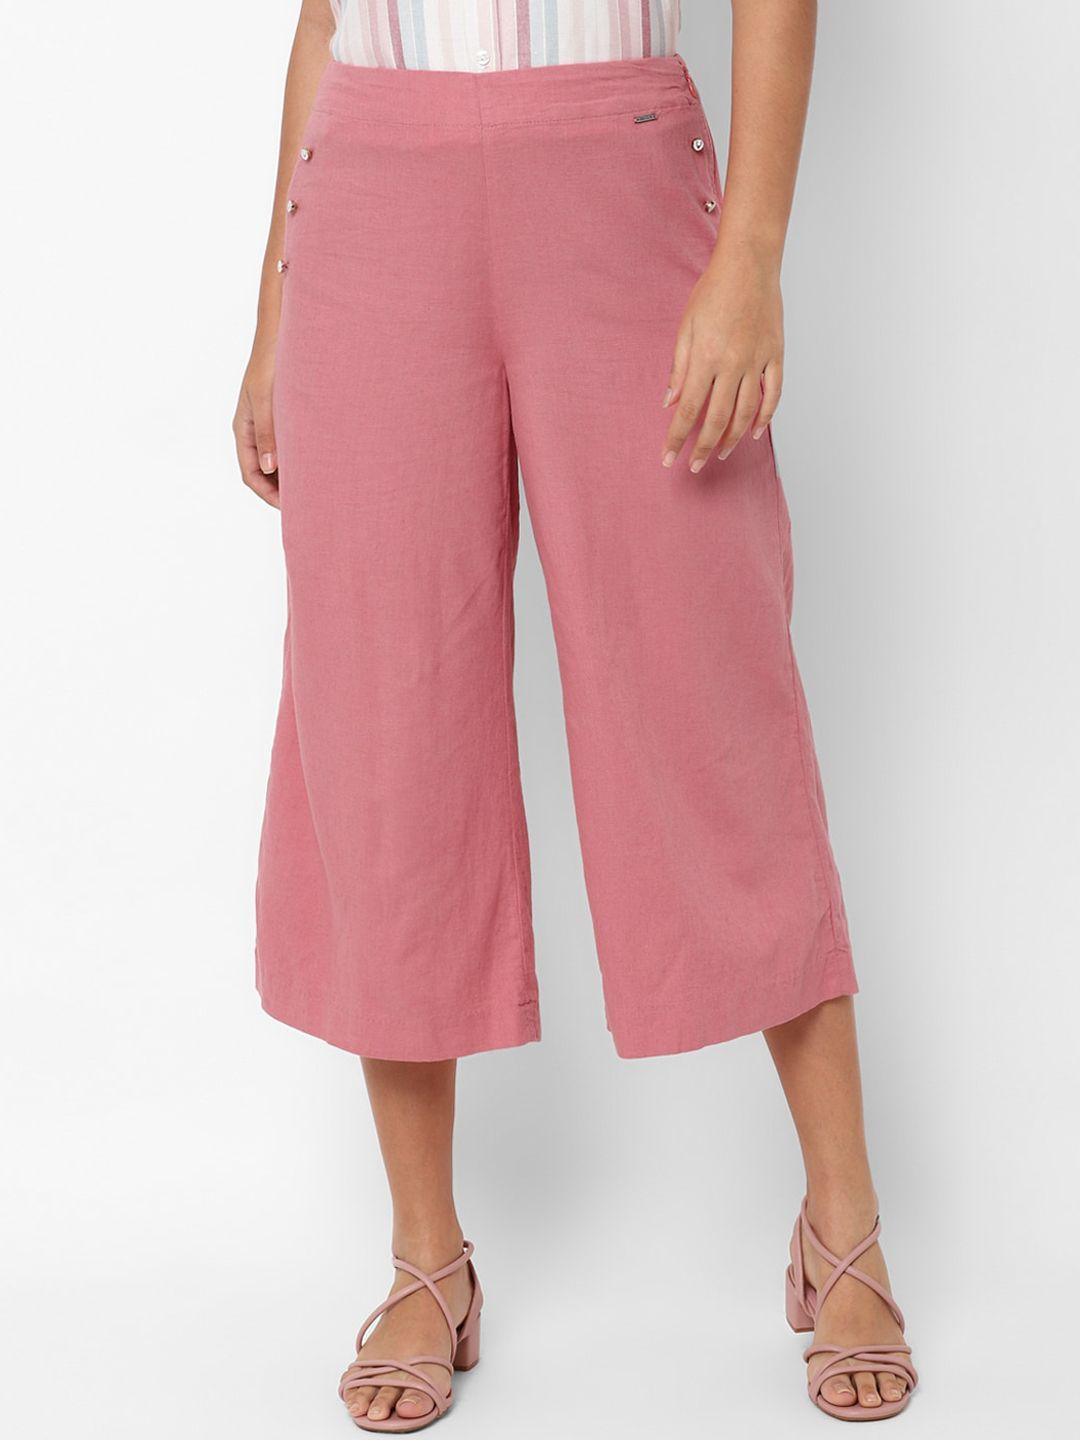 allen-solly-woman-women-pink-culottes-trousers